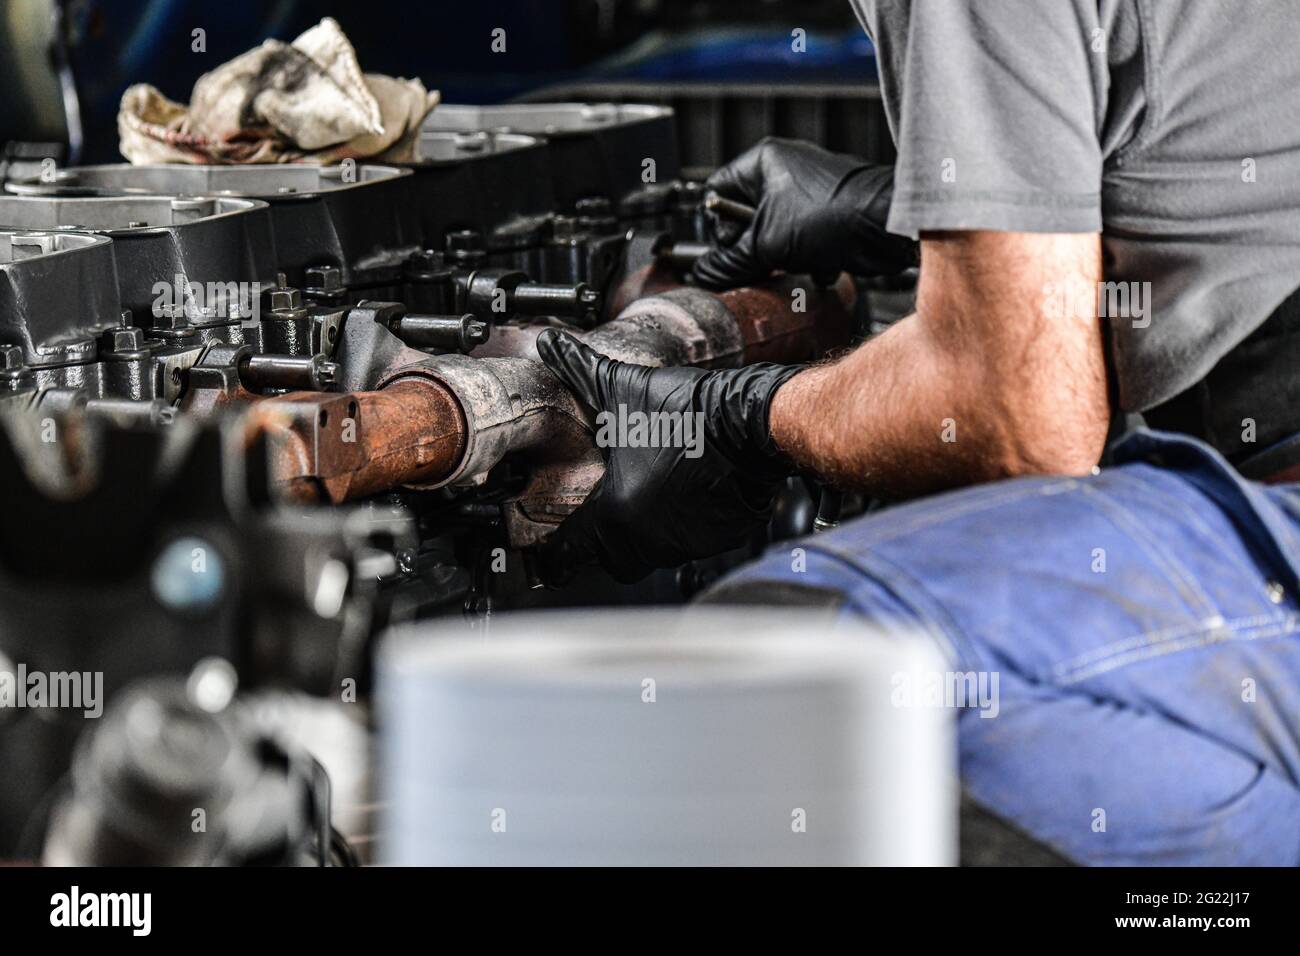 Mechanic truck repairing an engine. close up shot Stock Photo